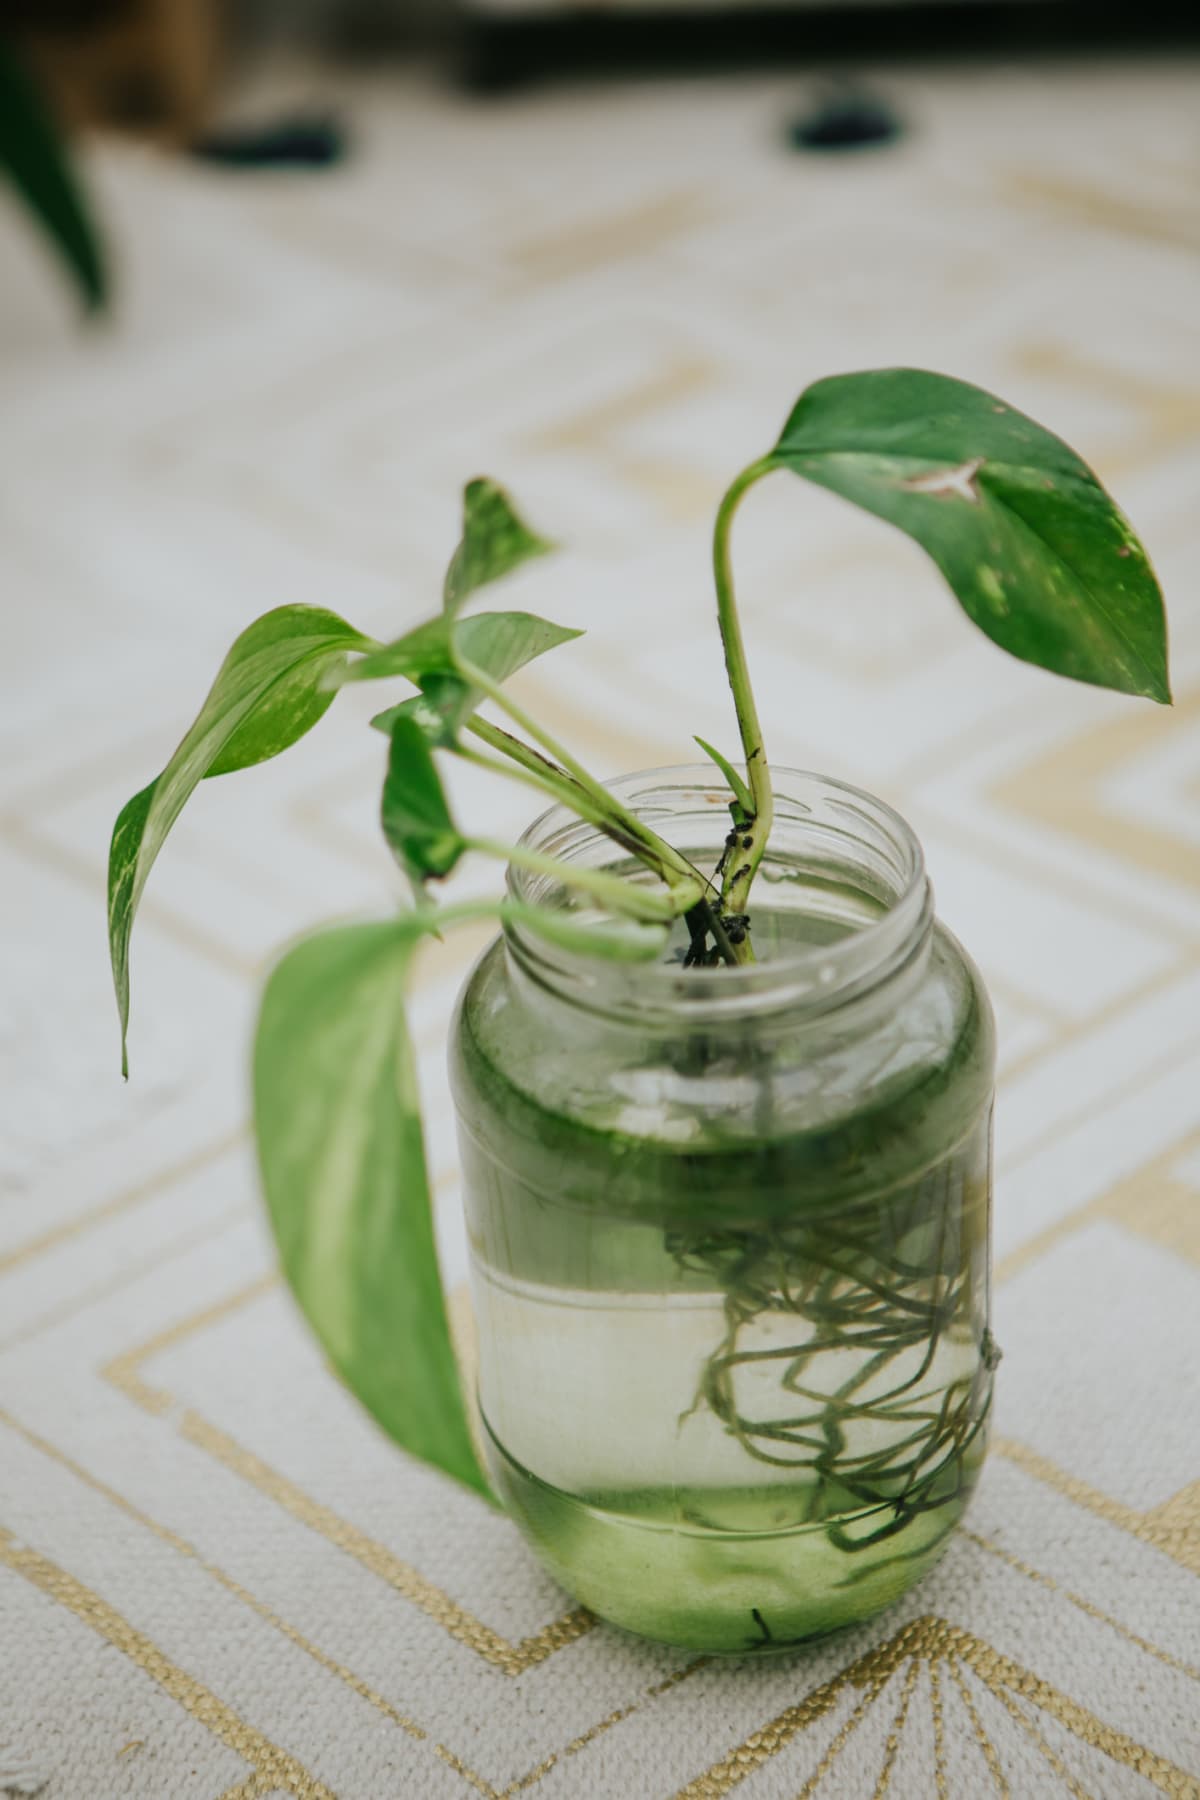 Propagating a plant in a glass jar